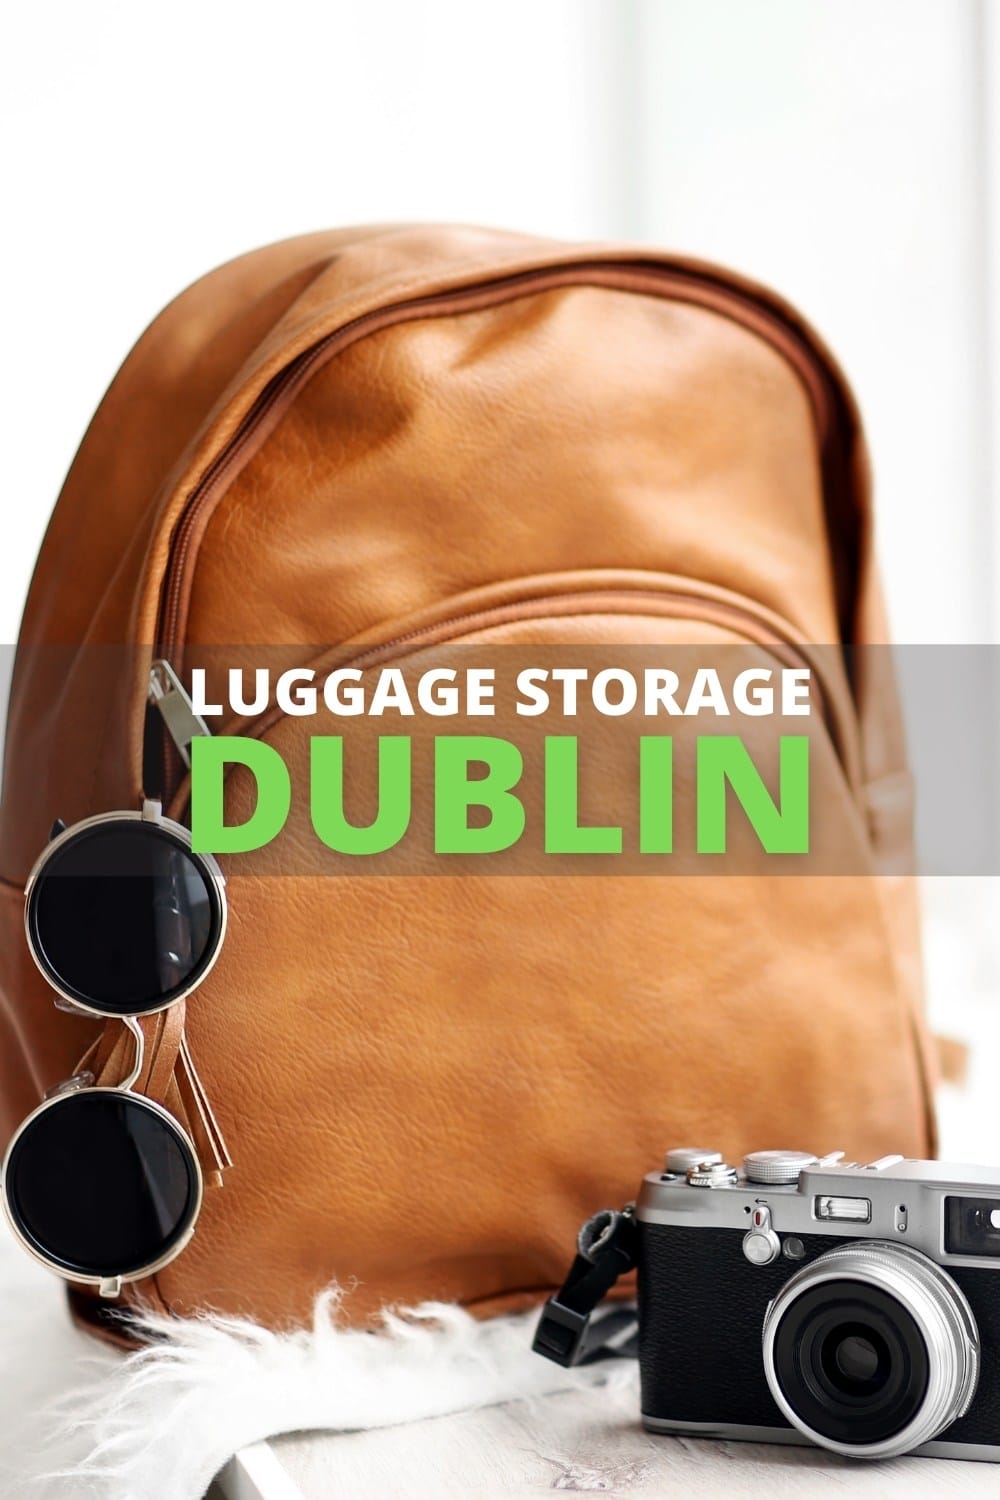 dublin luggage storage services pinterest